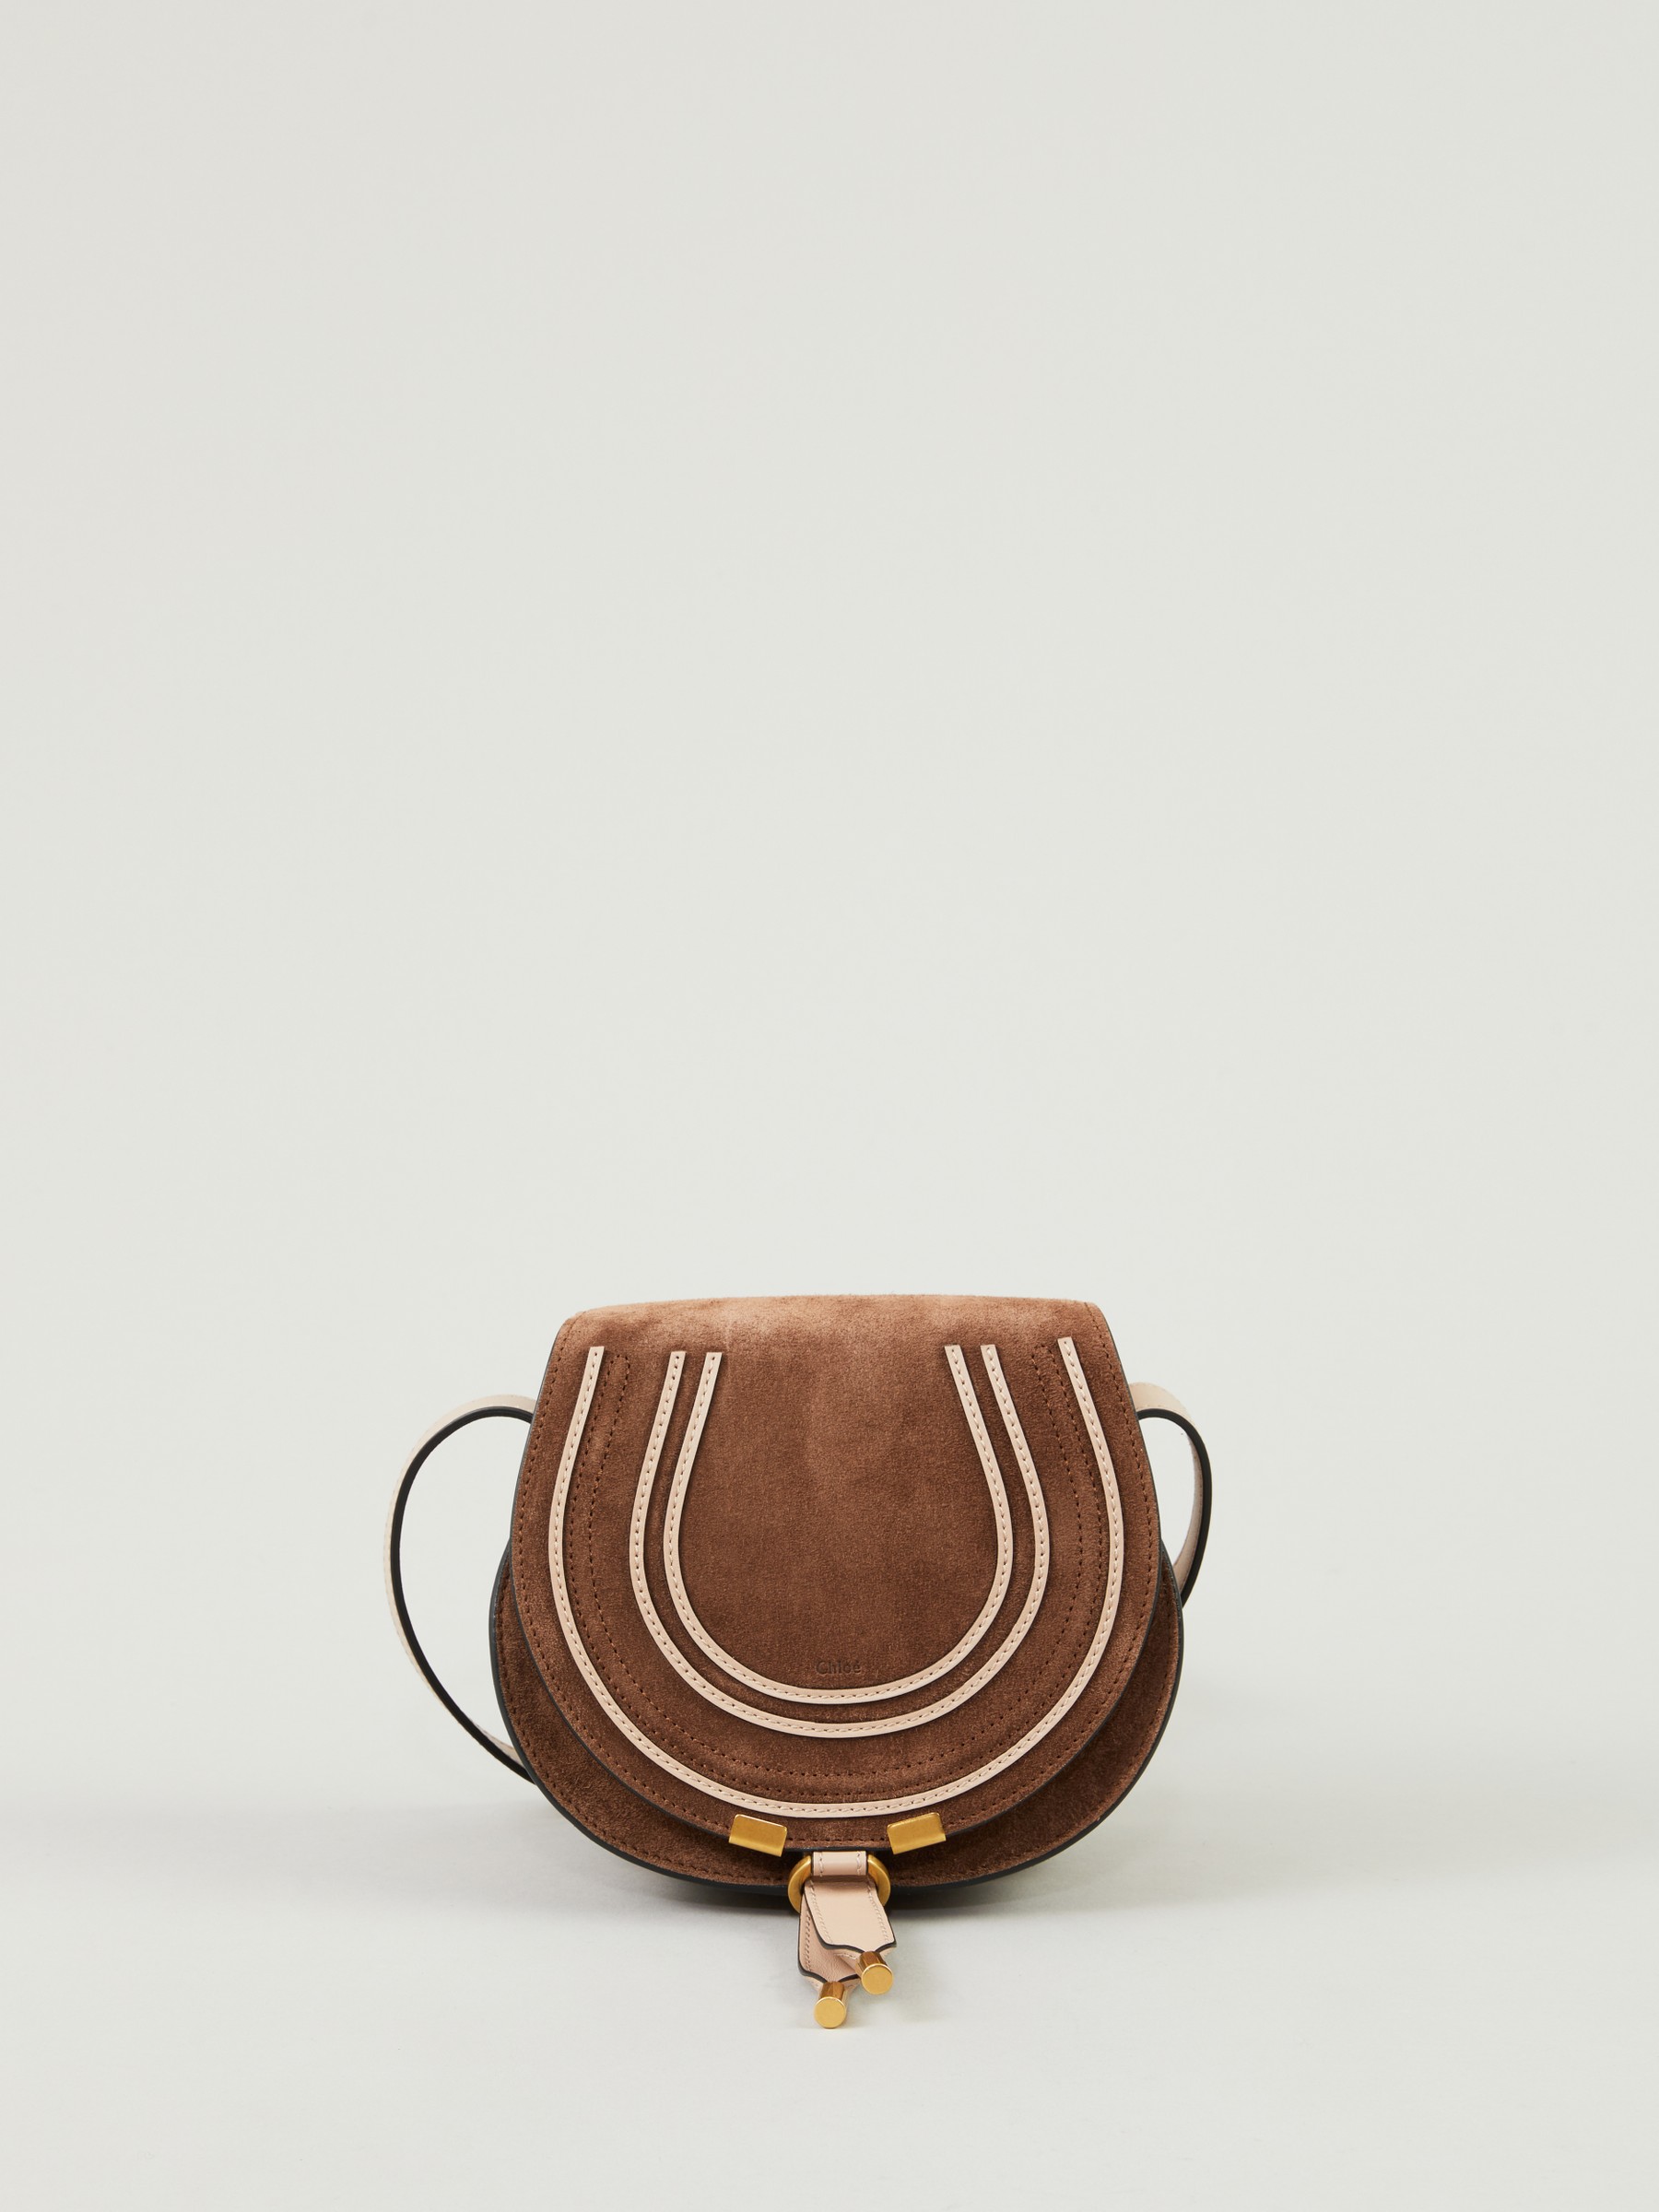 Marcie Small Saddle Bag in Brown - Chloe